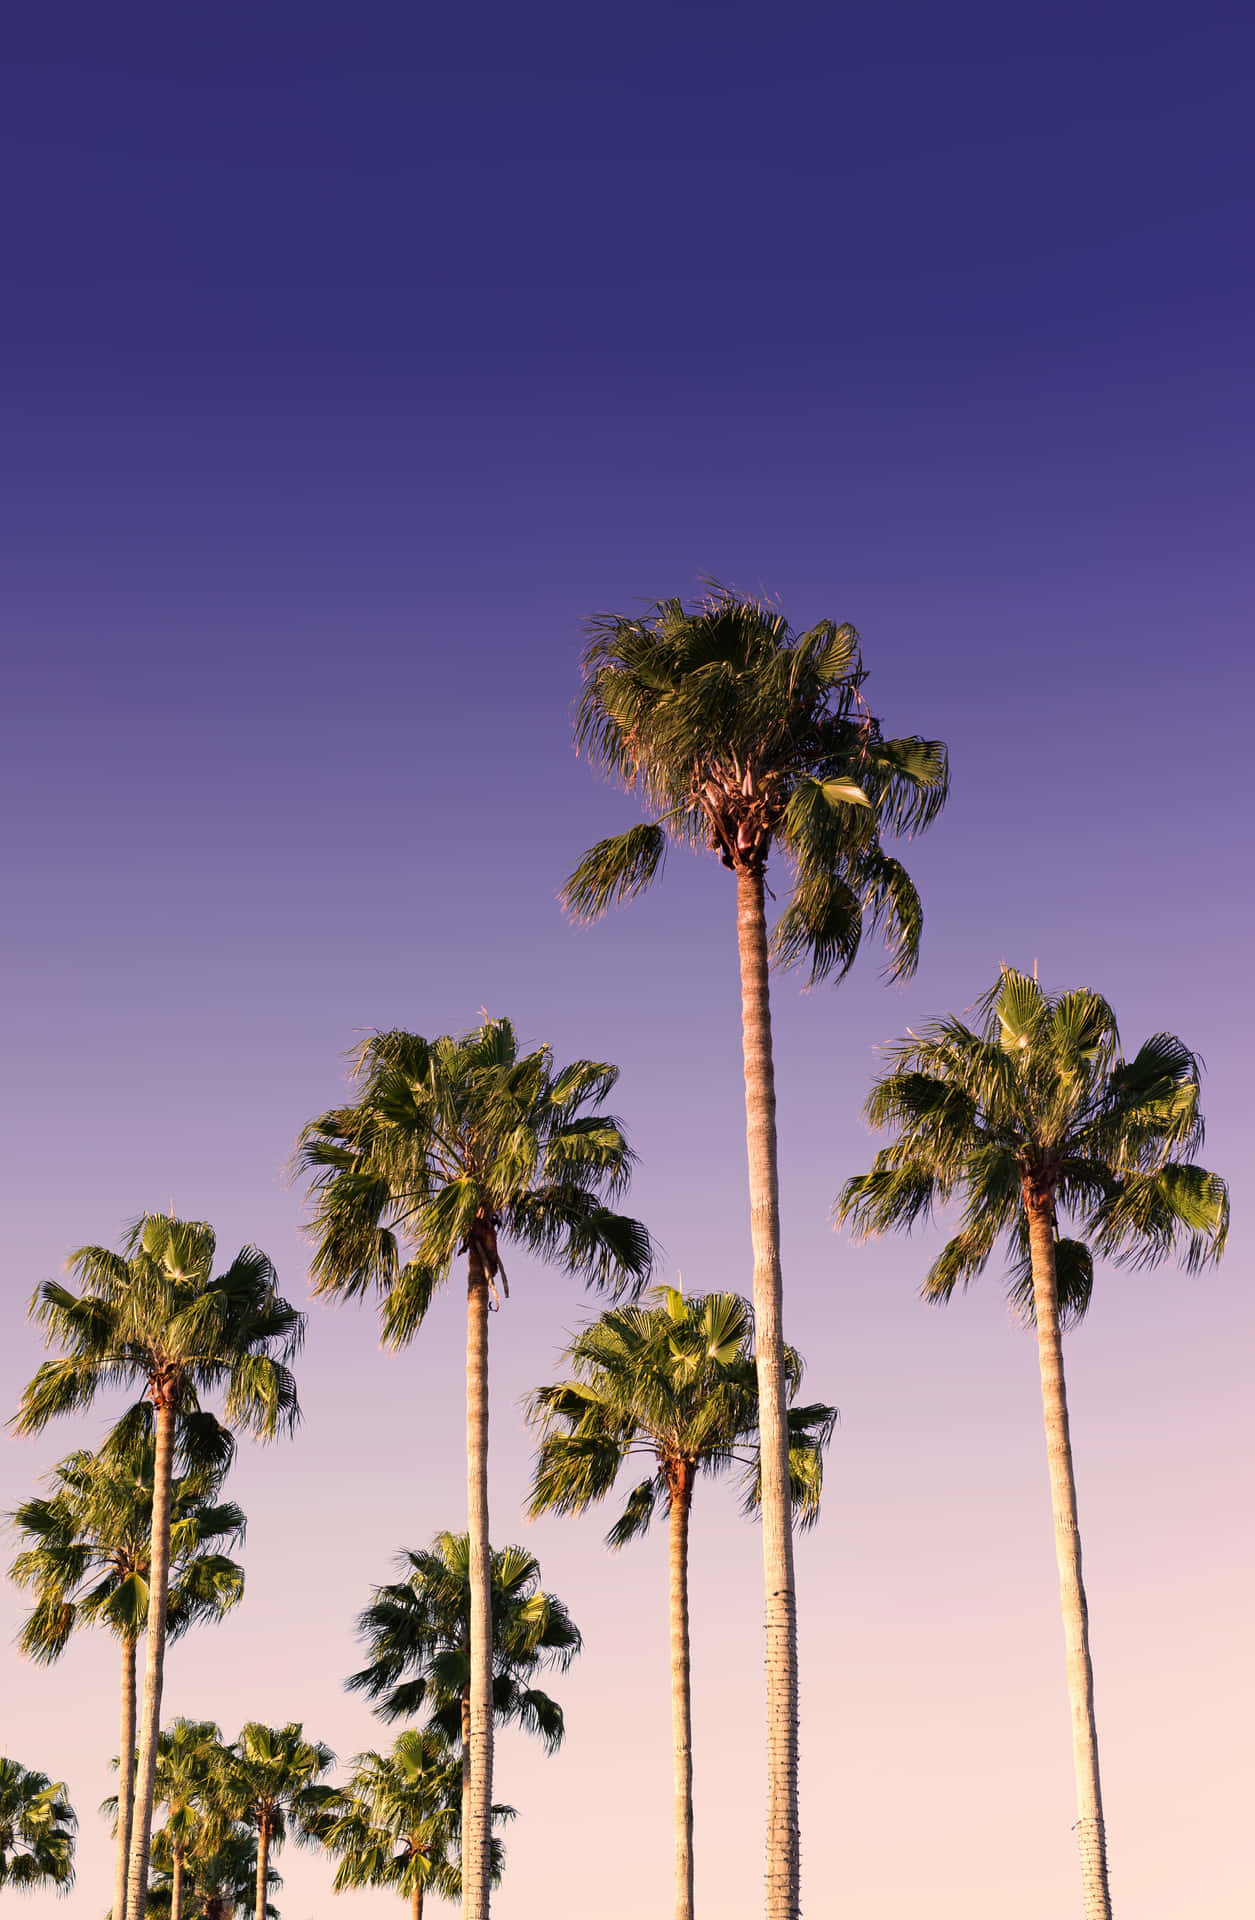 Caption: Tropical Palm Tree on a Sunny Day